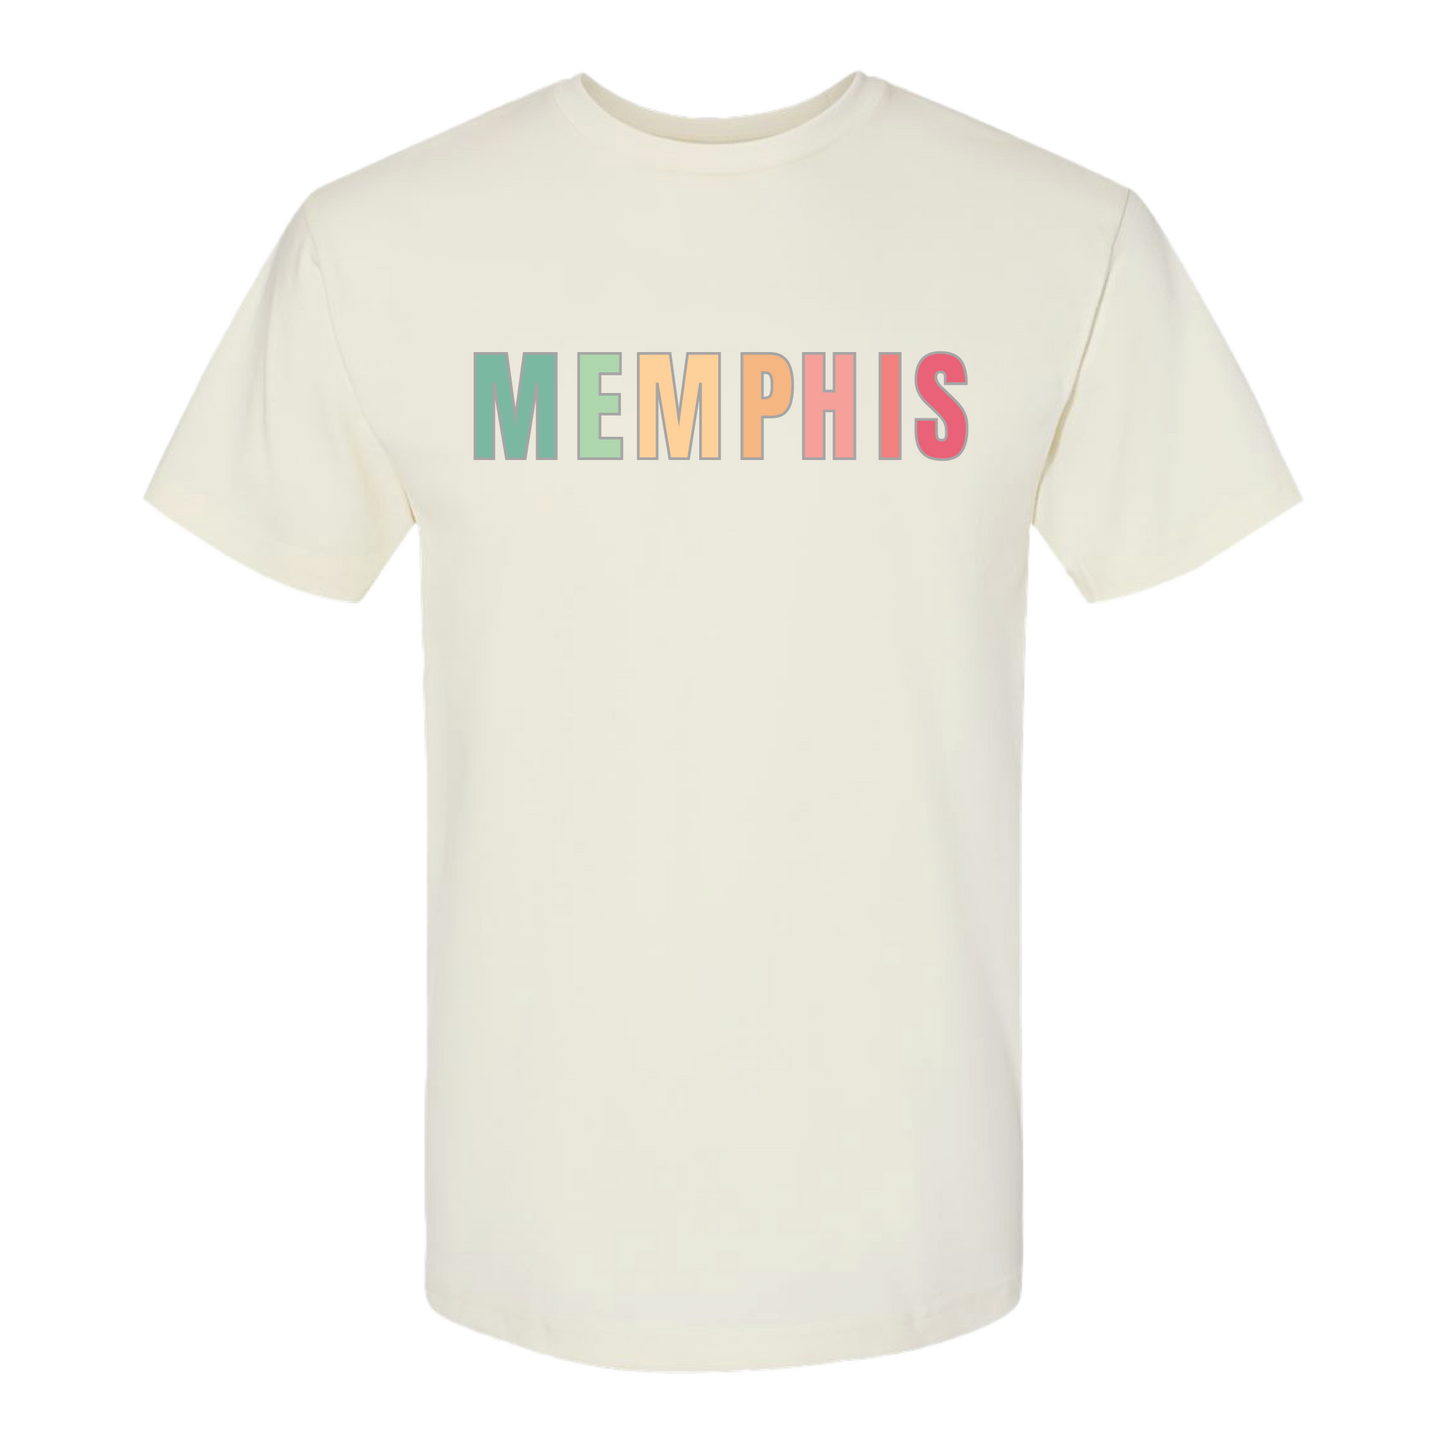 ALL Memphis